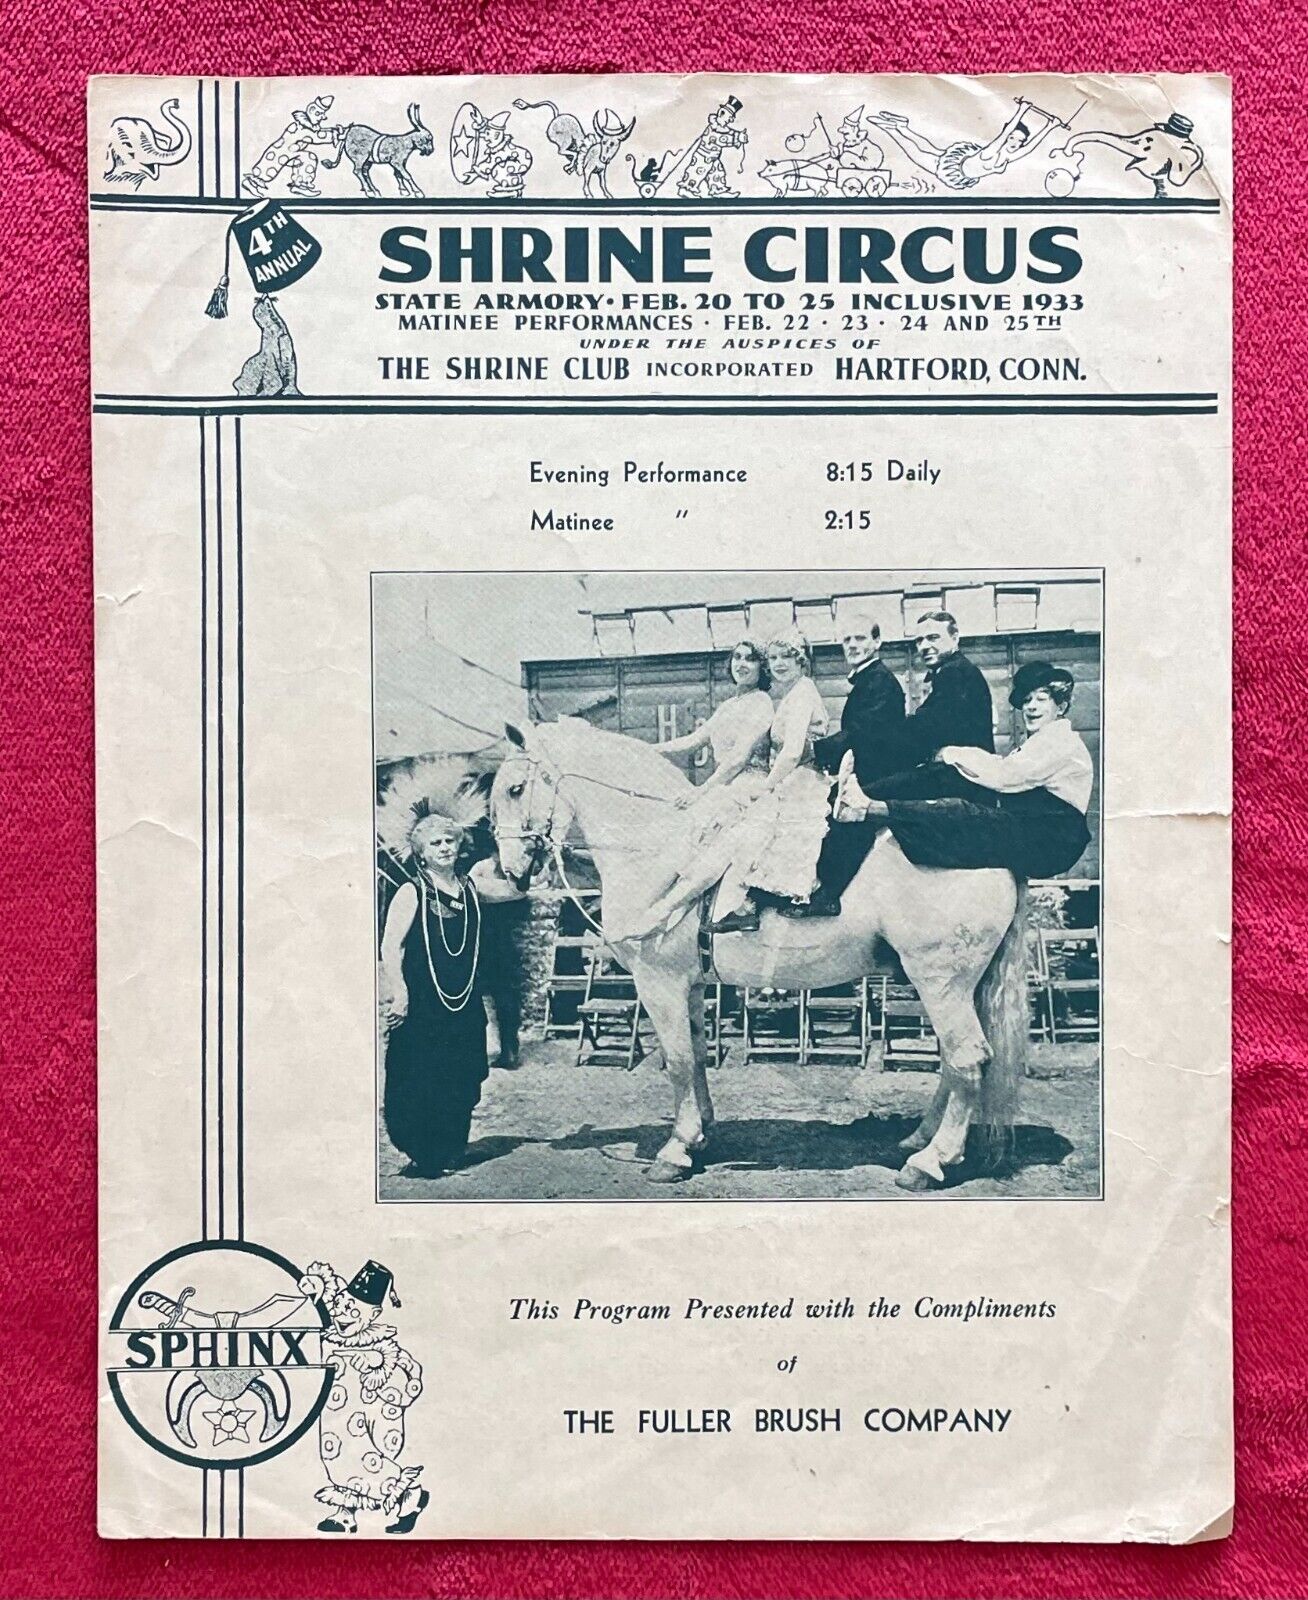 4th ANNUAL SHRINE CIRCUS 1933 PROGRAM - SHRINERS CLUB, HARTFORD, CONNECTICUT